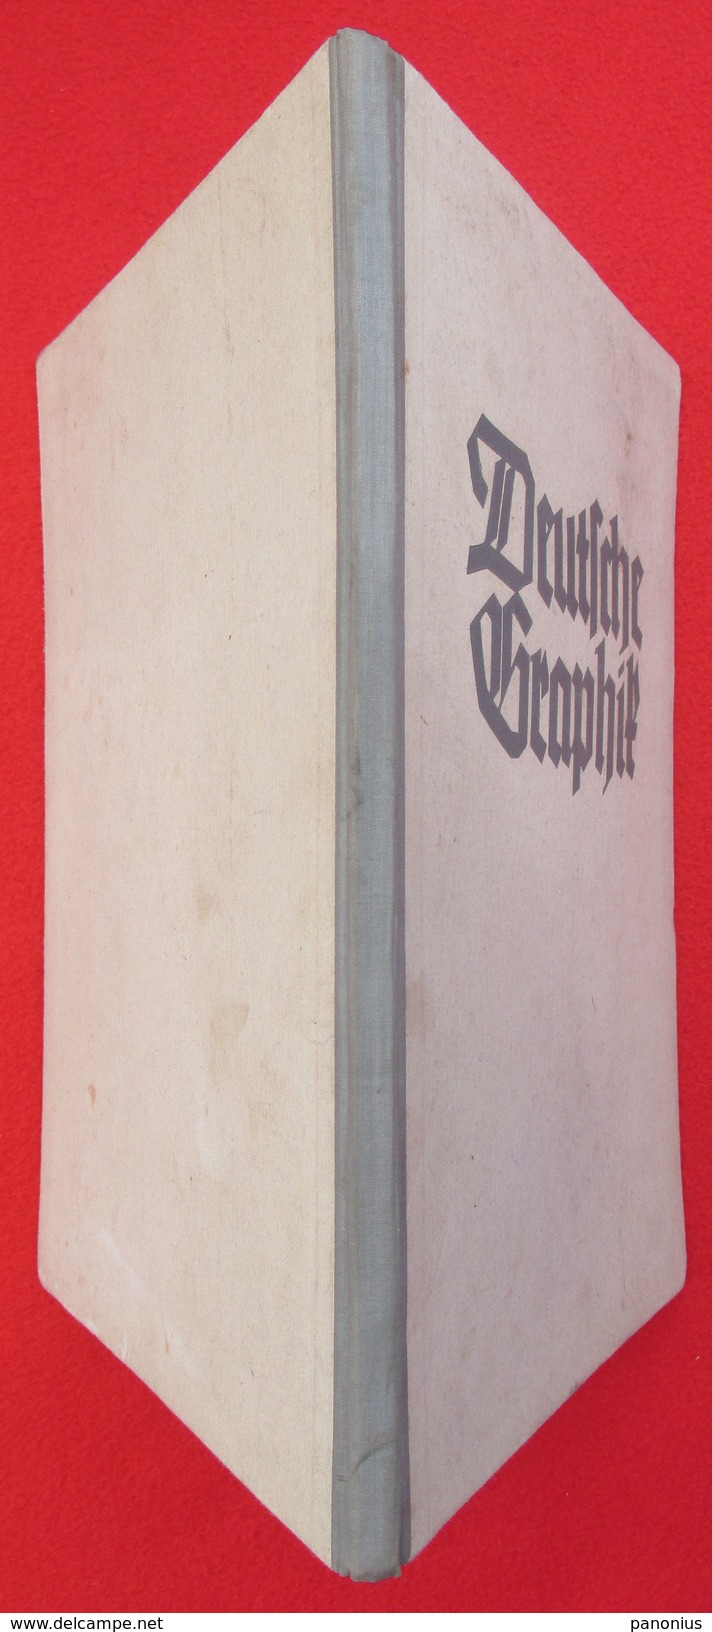 DEUTSCHE GRAPHIK - art book, monograph, painting, period III Reich, Berlin, Germany